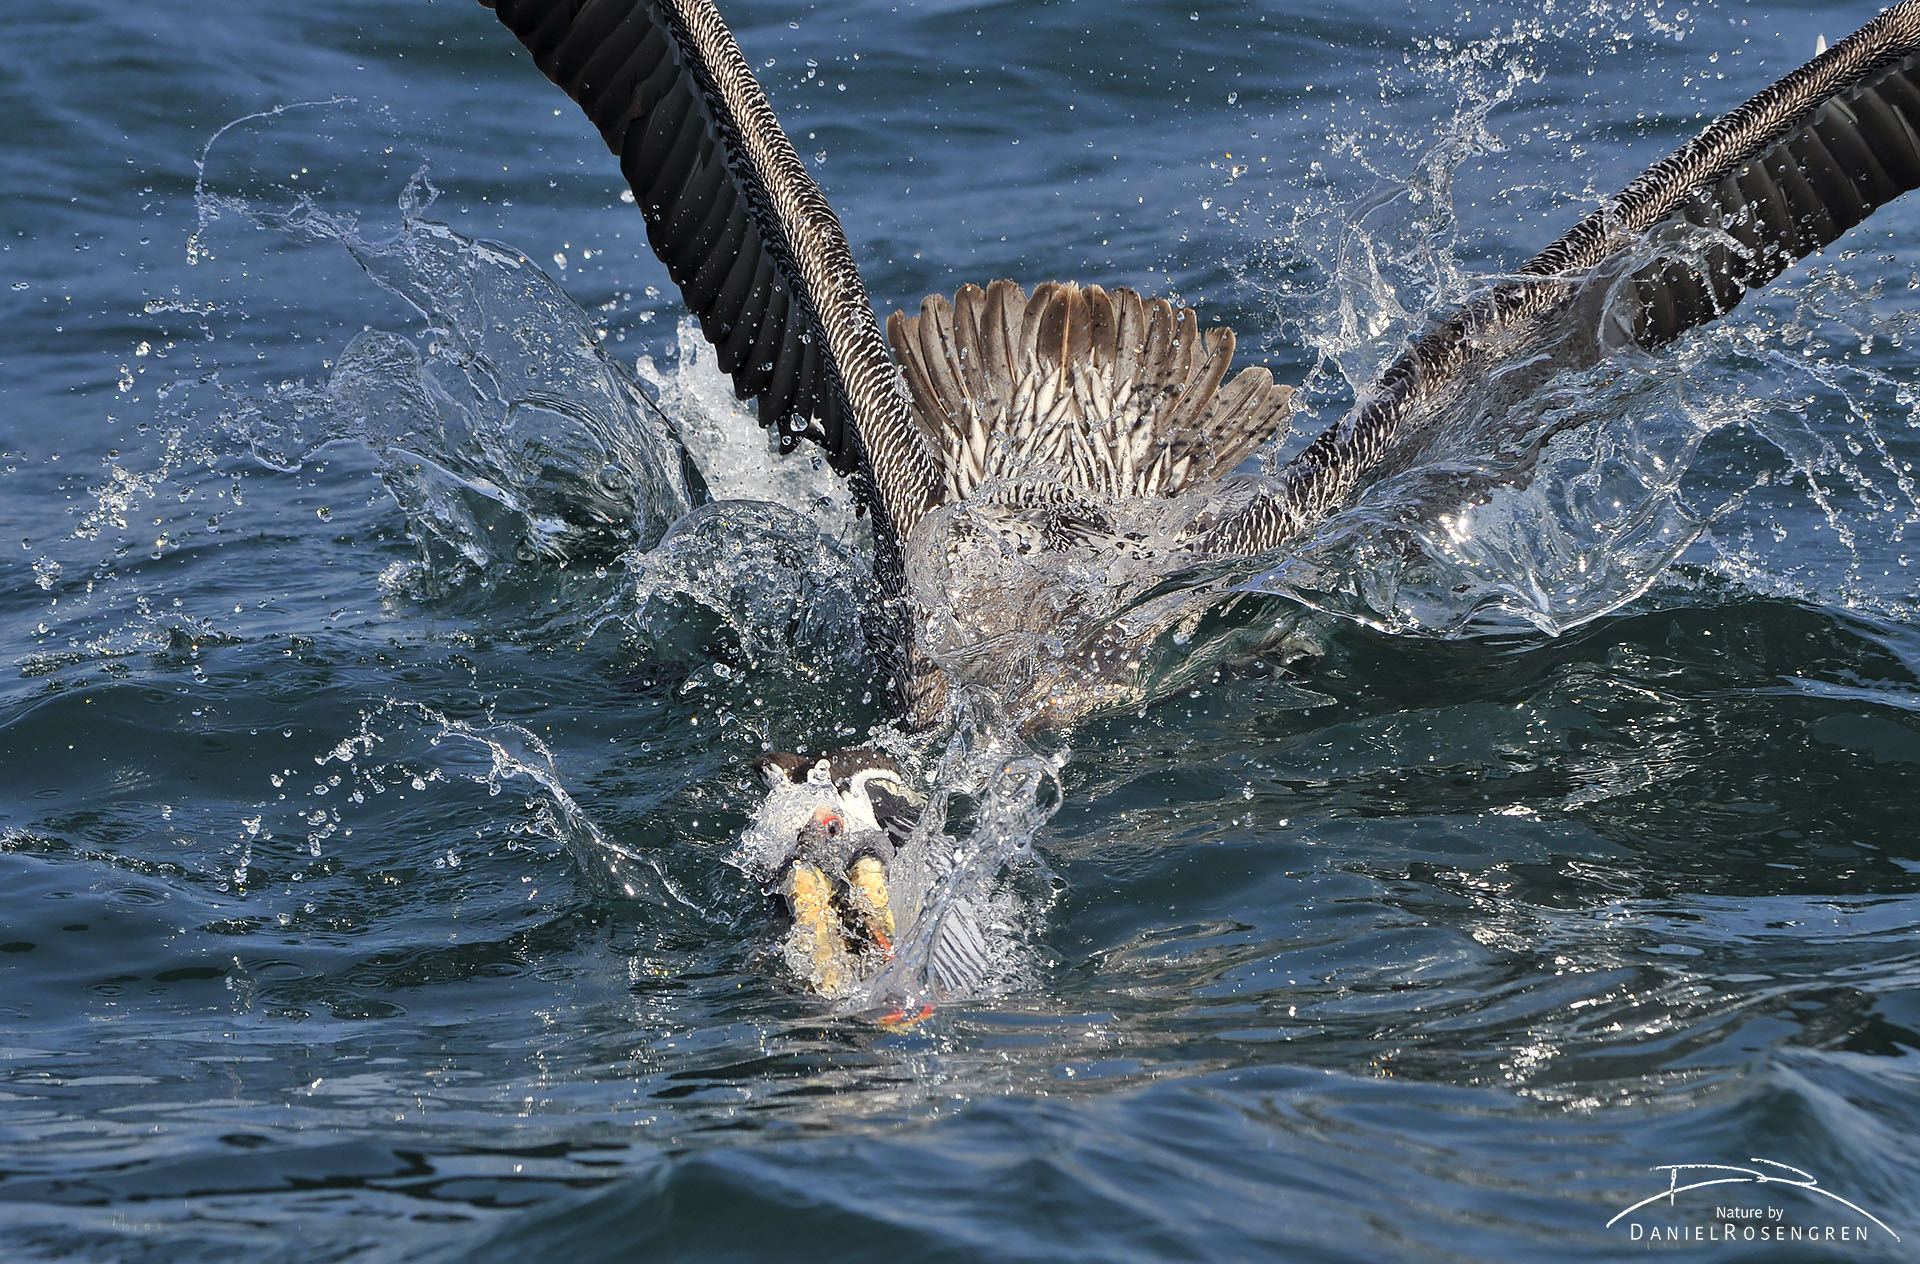 A Peruvian pelican scooping fish with its massive beak. © Daniel Rosengren